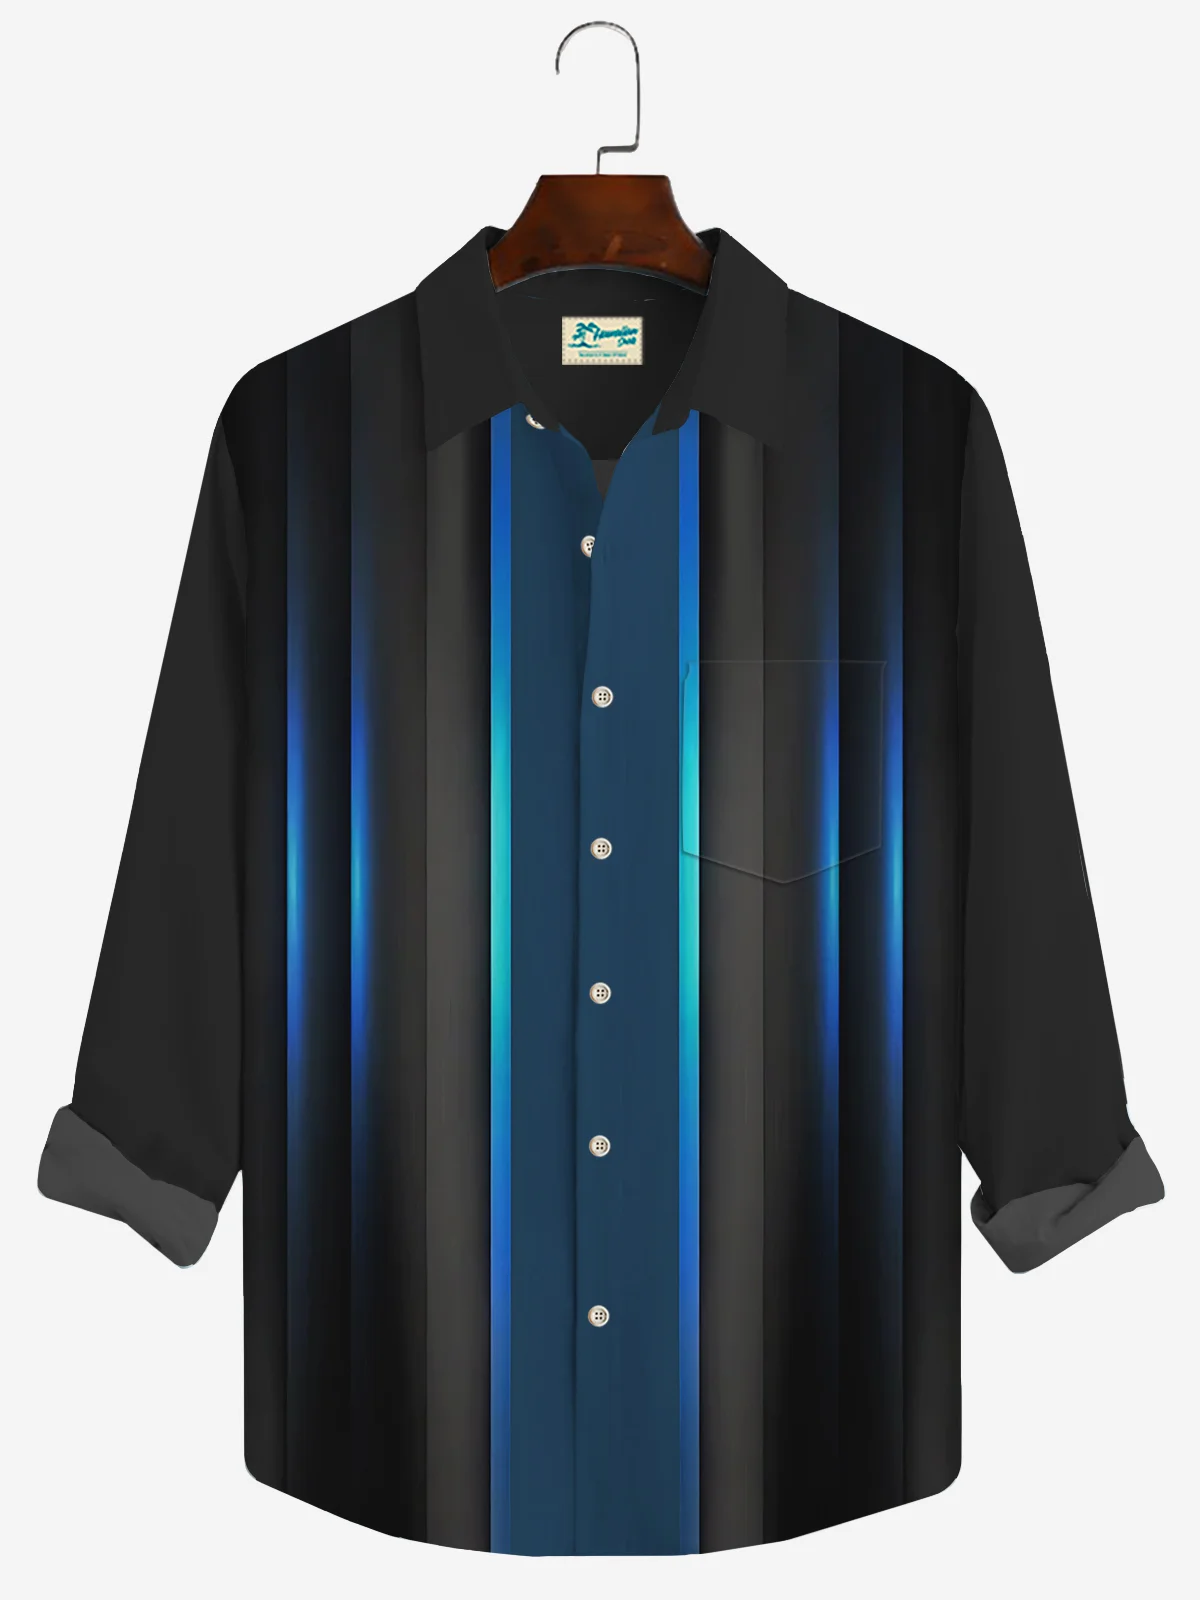 Royaura Gradient Vintage Print Men's Button Pocket Long Sleeve Shirt